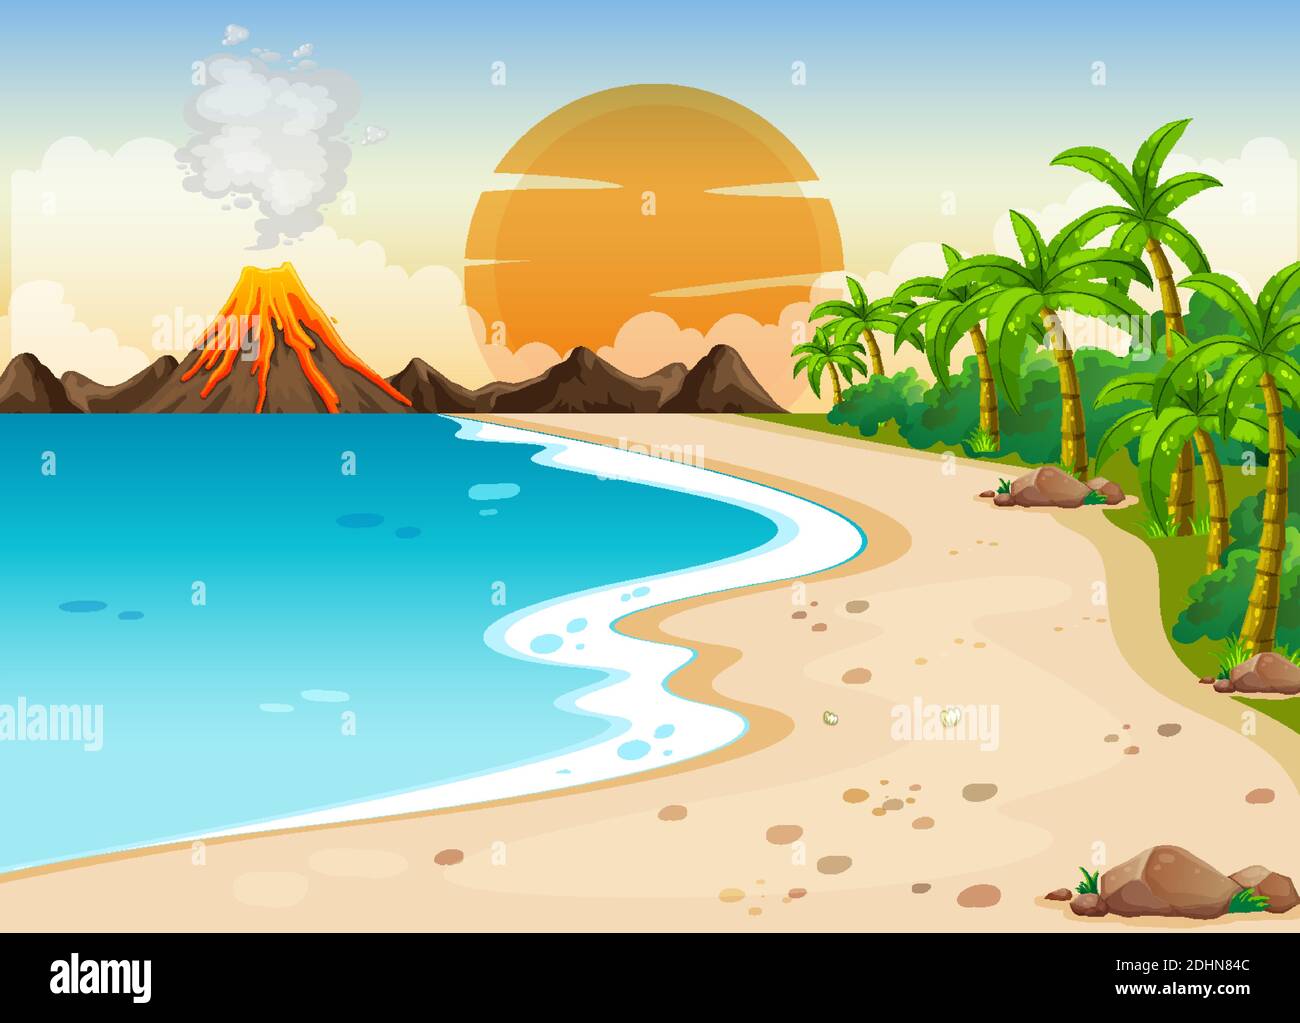 Volcanic eruption outdoor scene background illustration Stock Vector